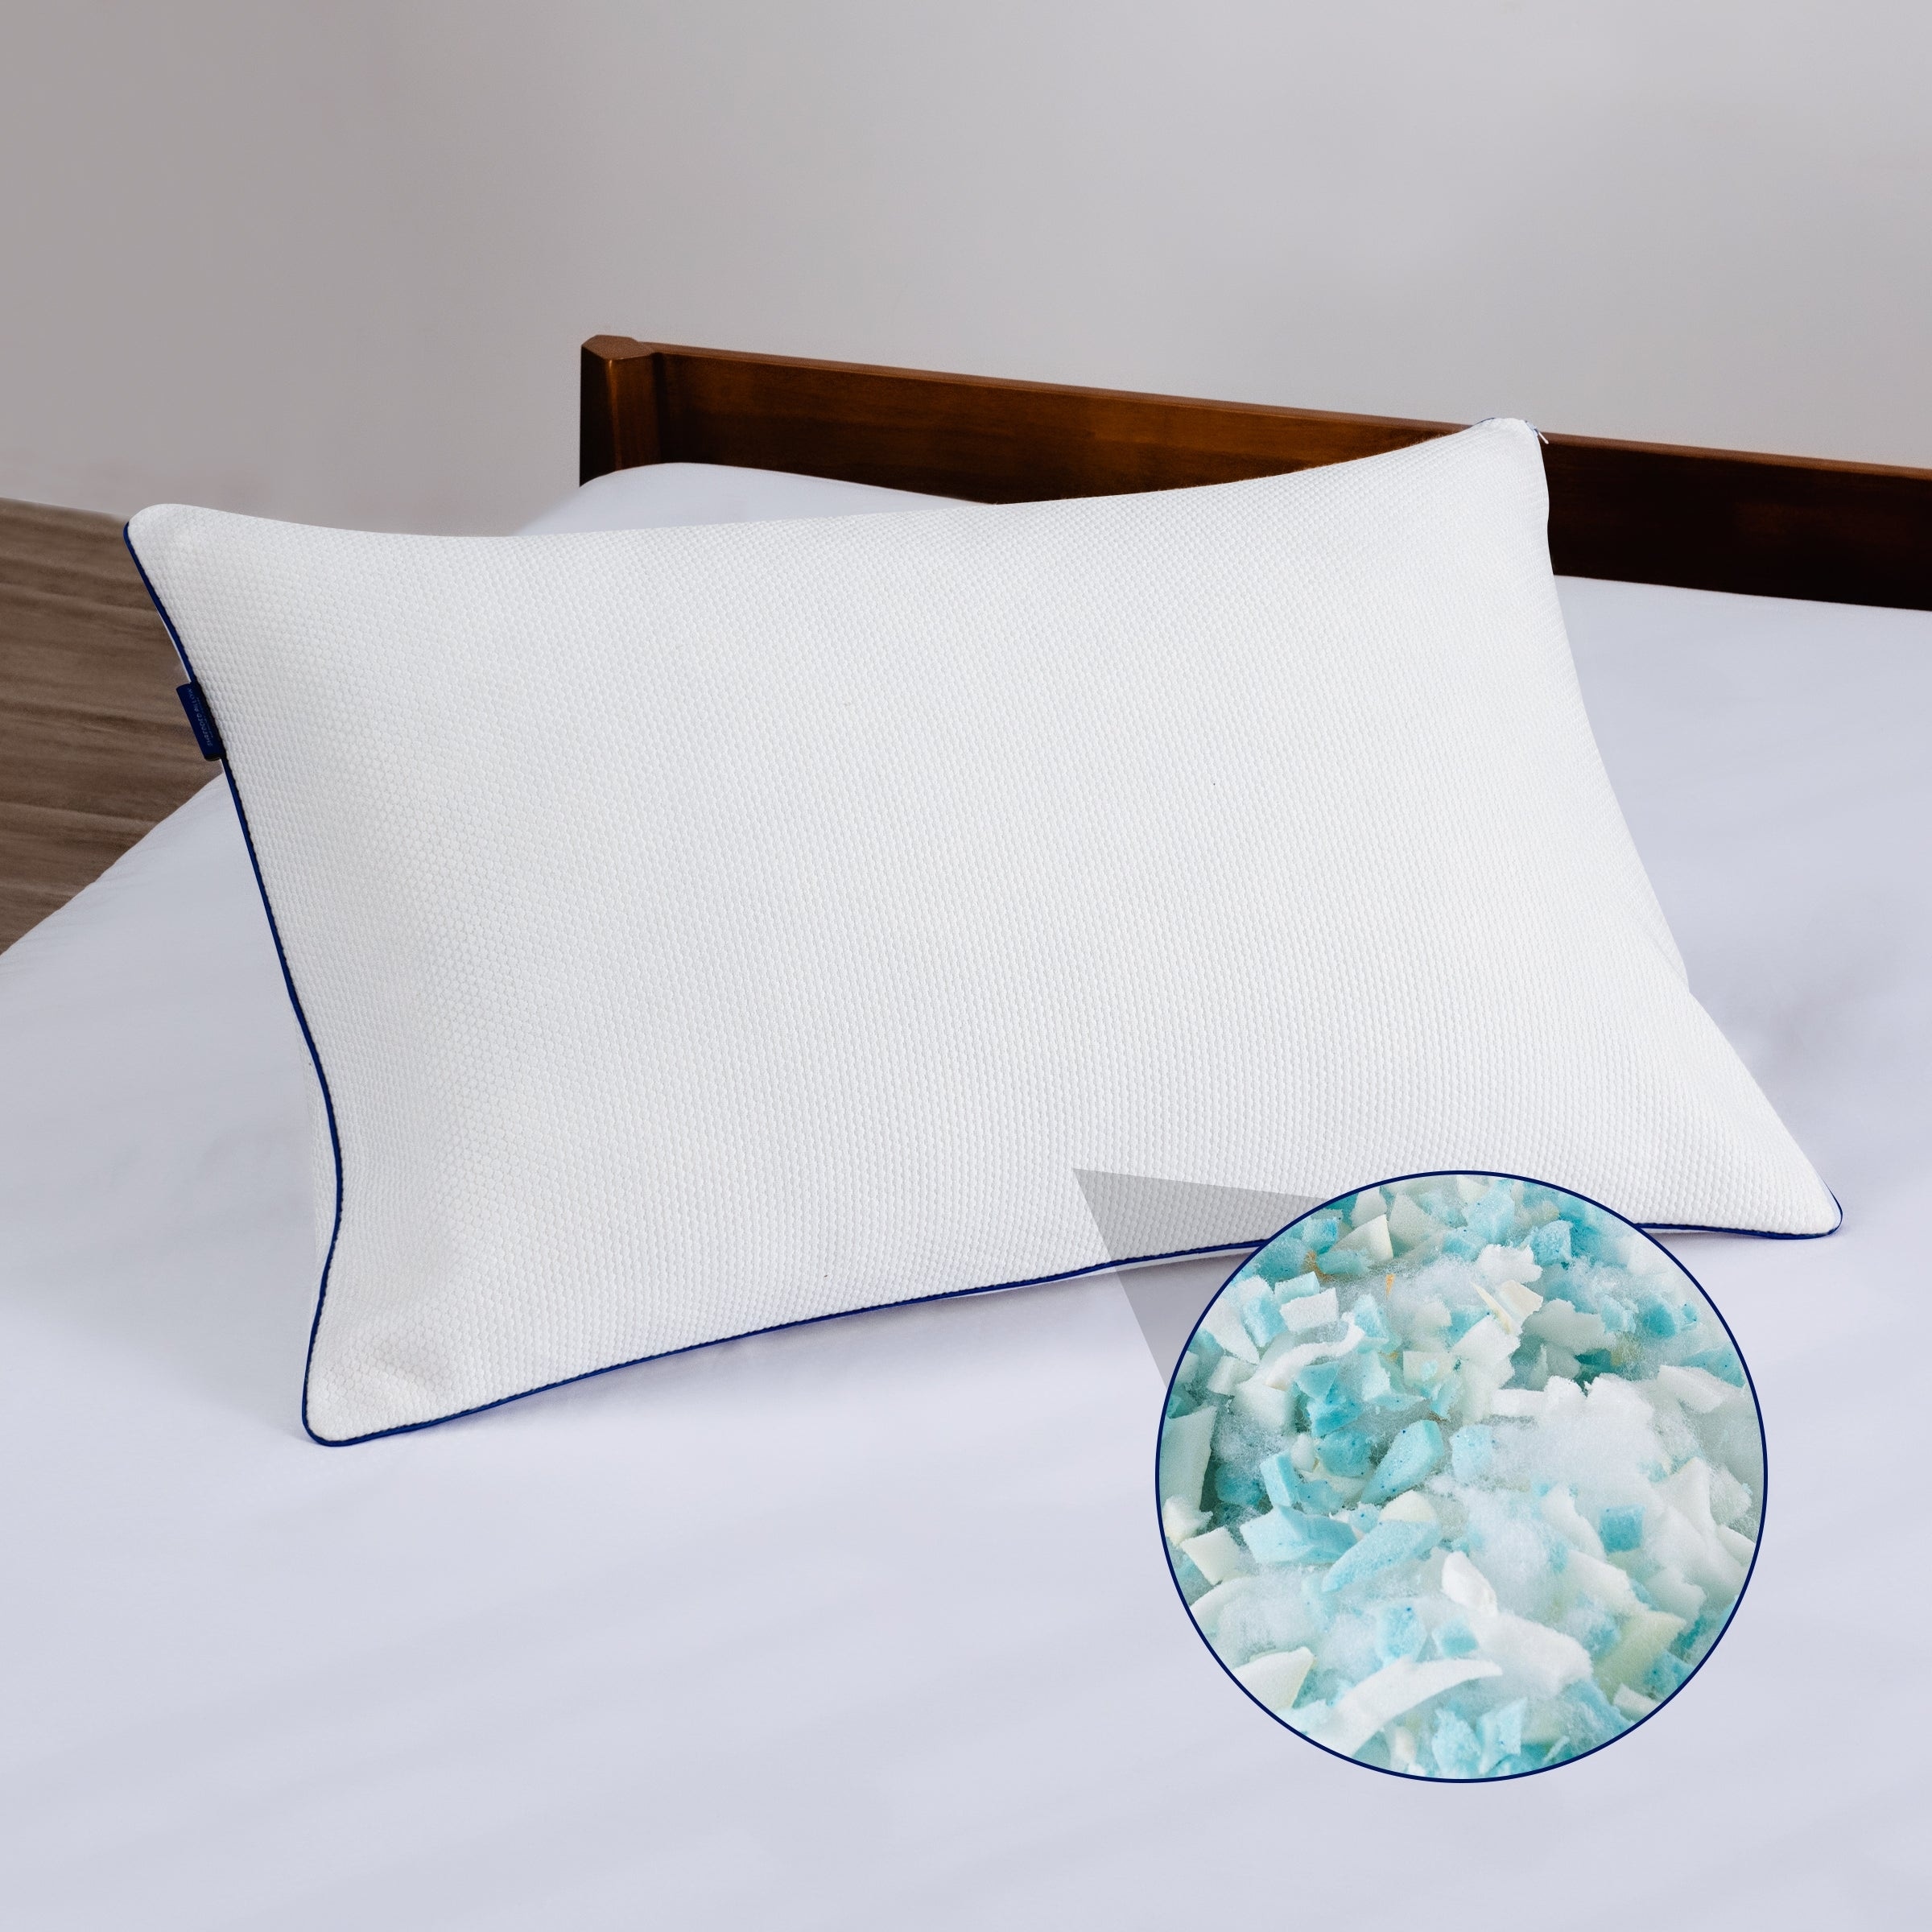 Subrtex Adjustable Shredded Memory Foam Bed Pillow